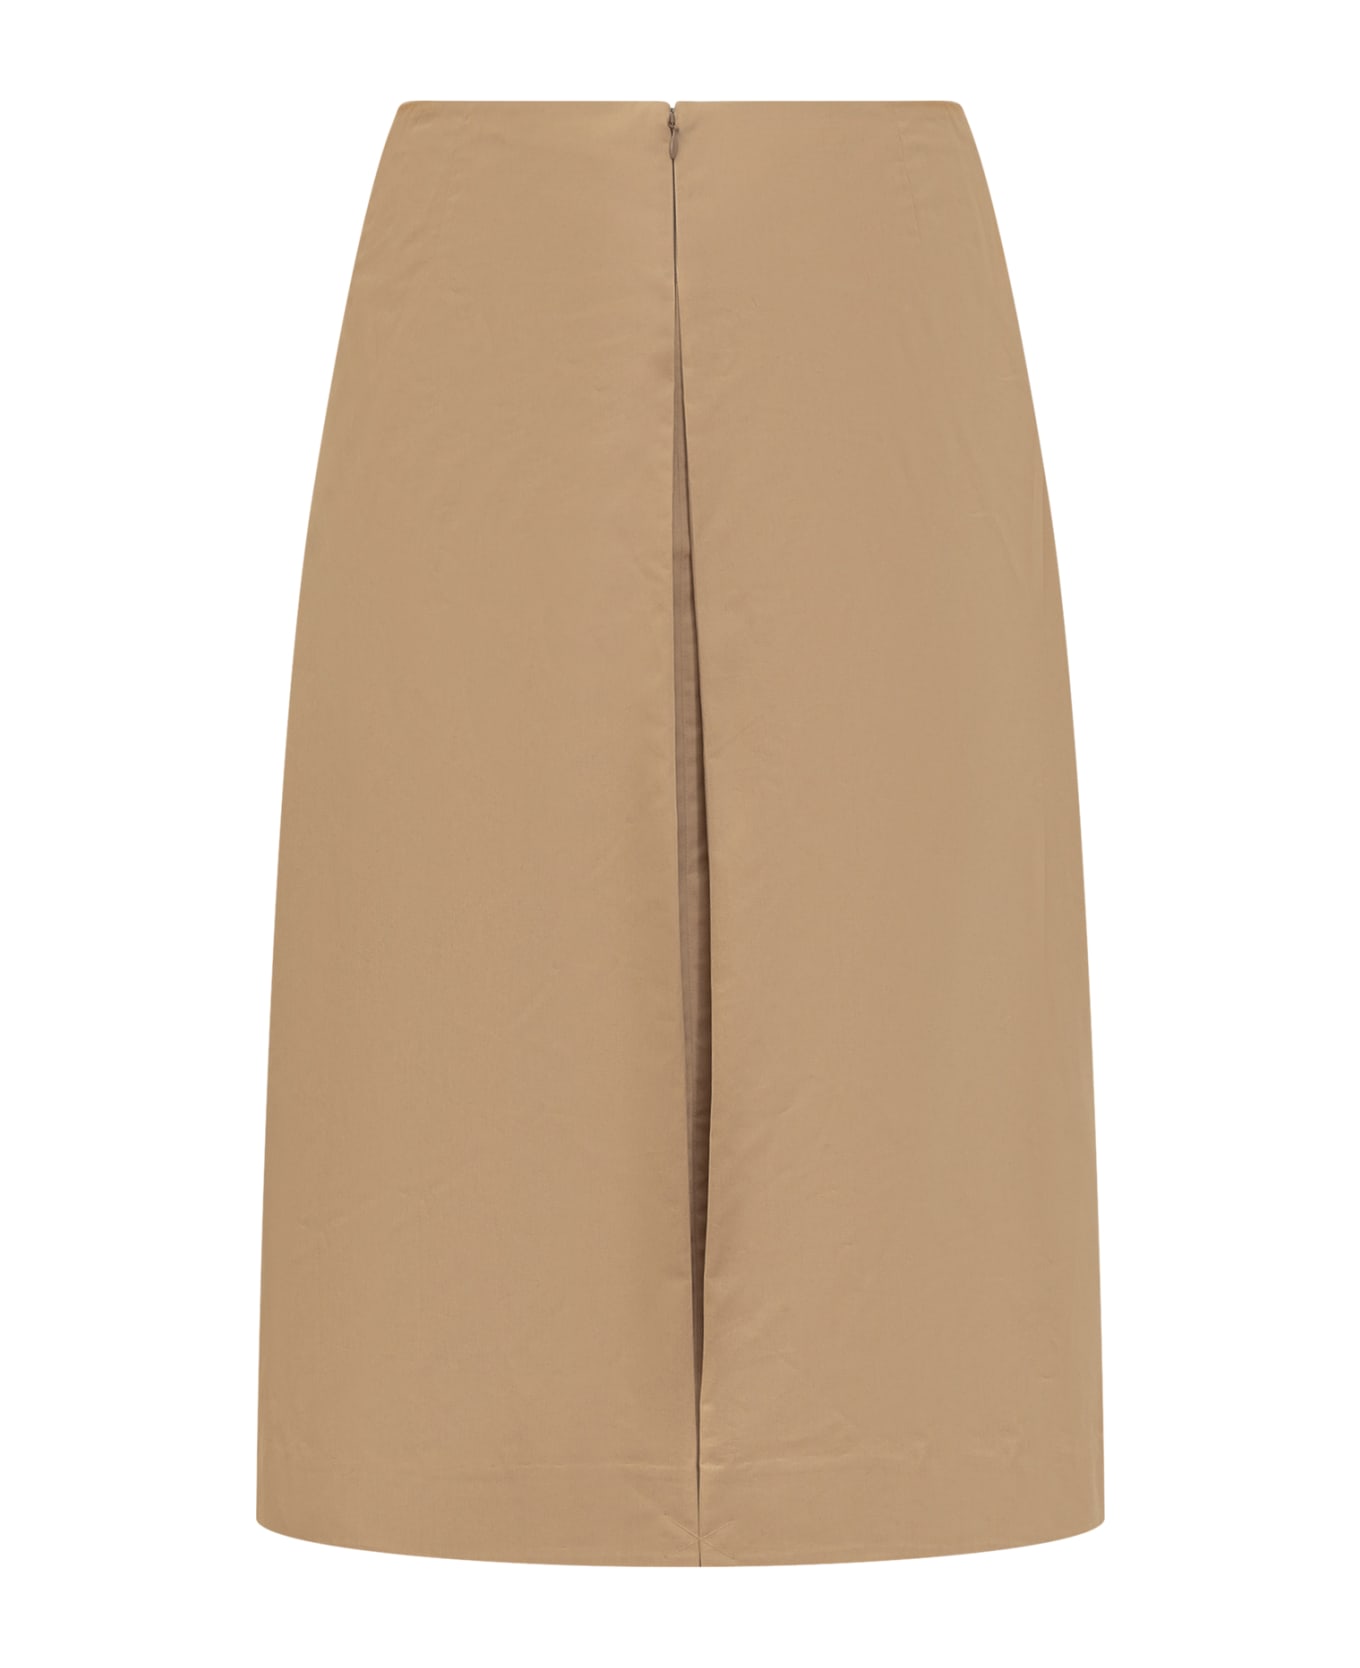 Tory Burch Pleated Skirt - SUMMER SAND